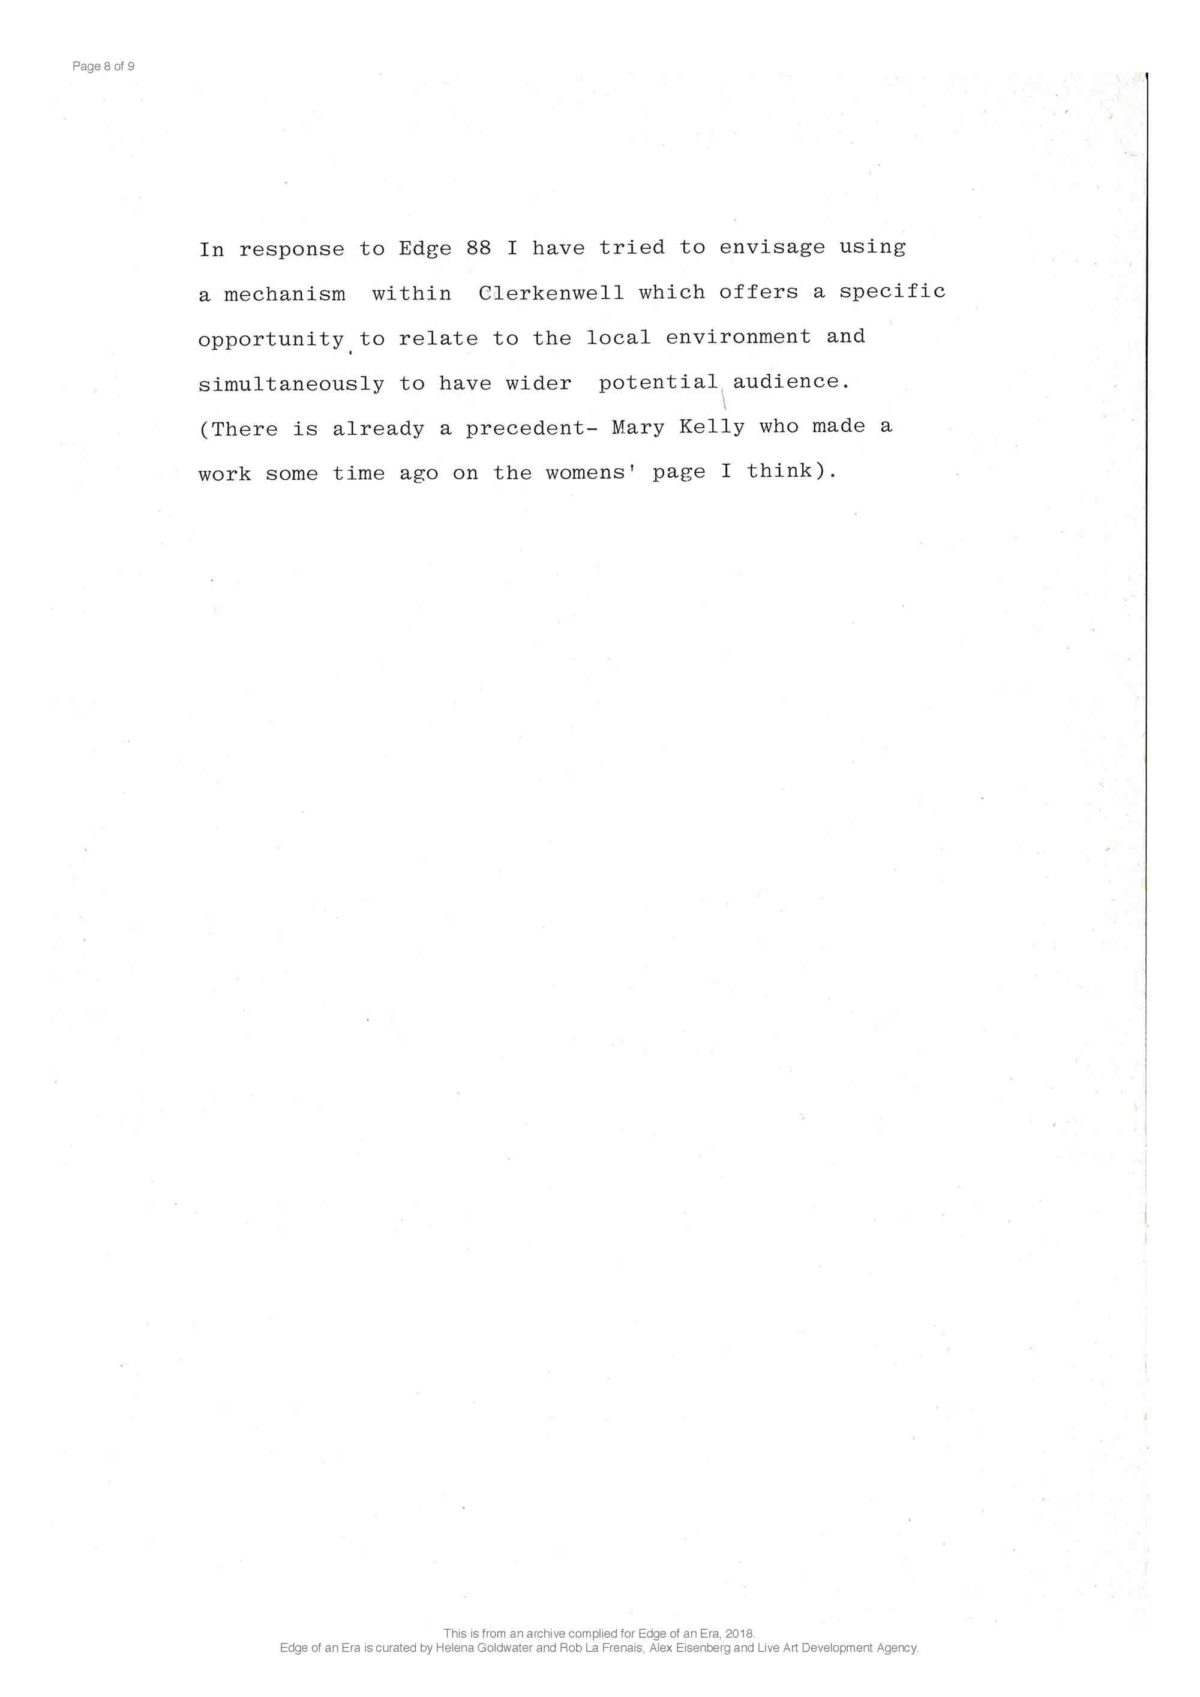 Stuart Brisley, Correspondence, 1988 (Page 8 of 9)